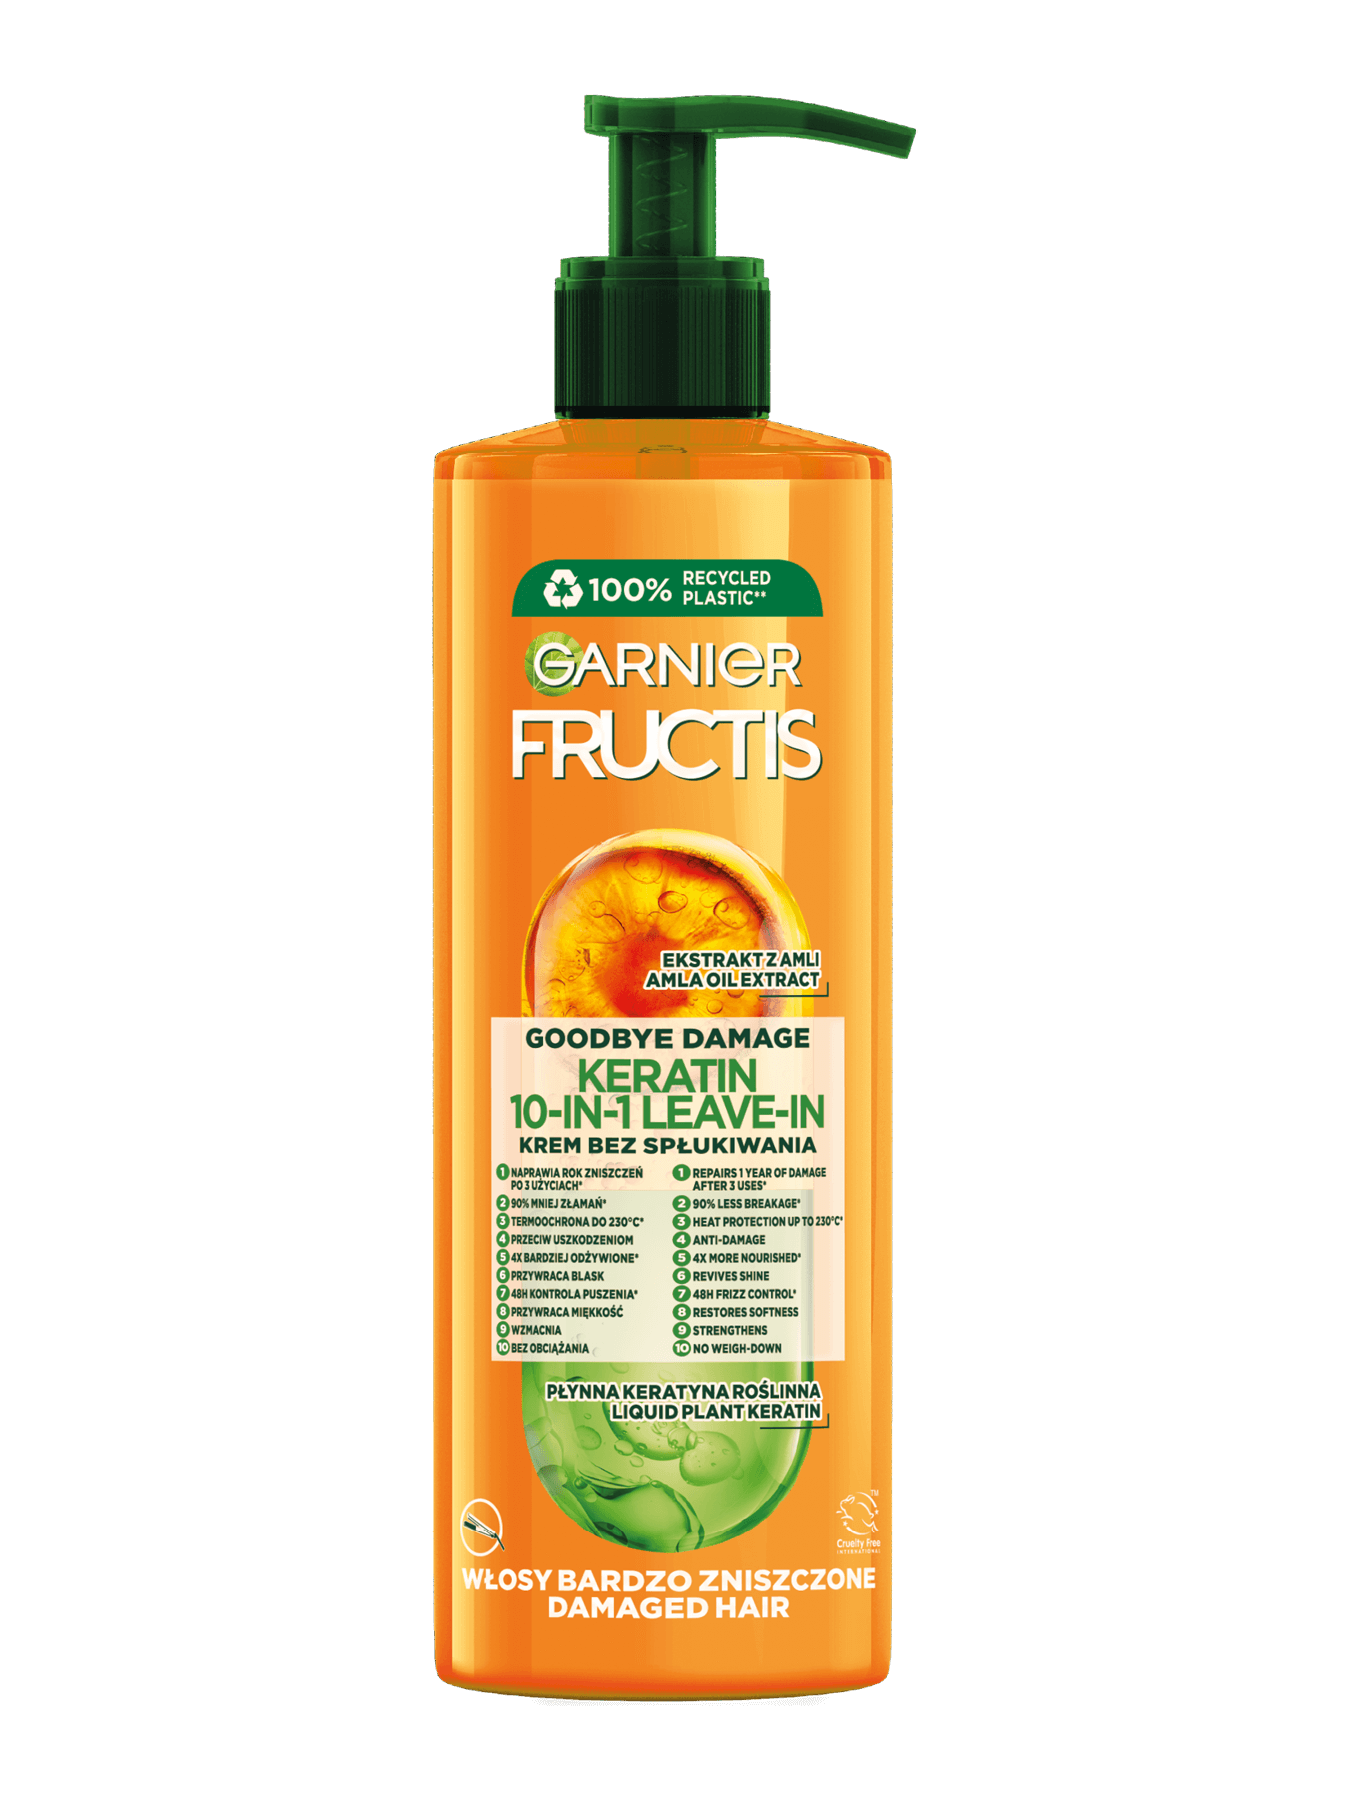 garnier fructis goodbye damage szampon skład